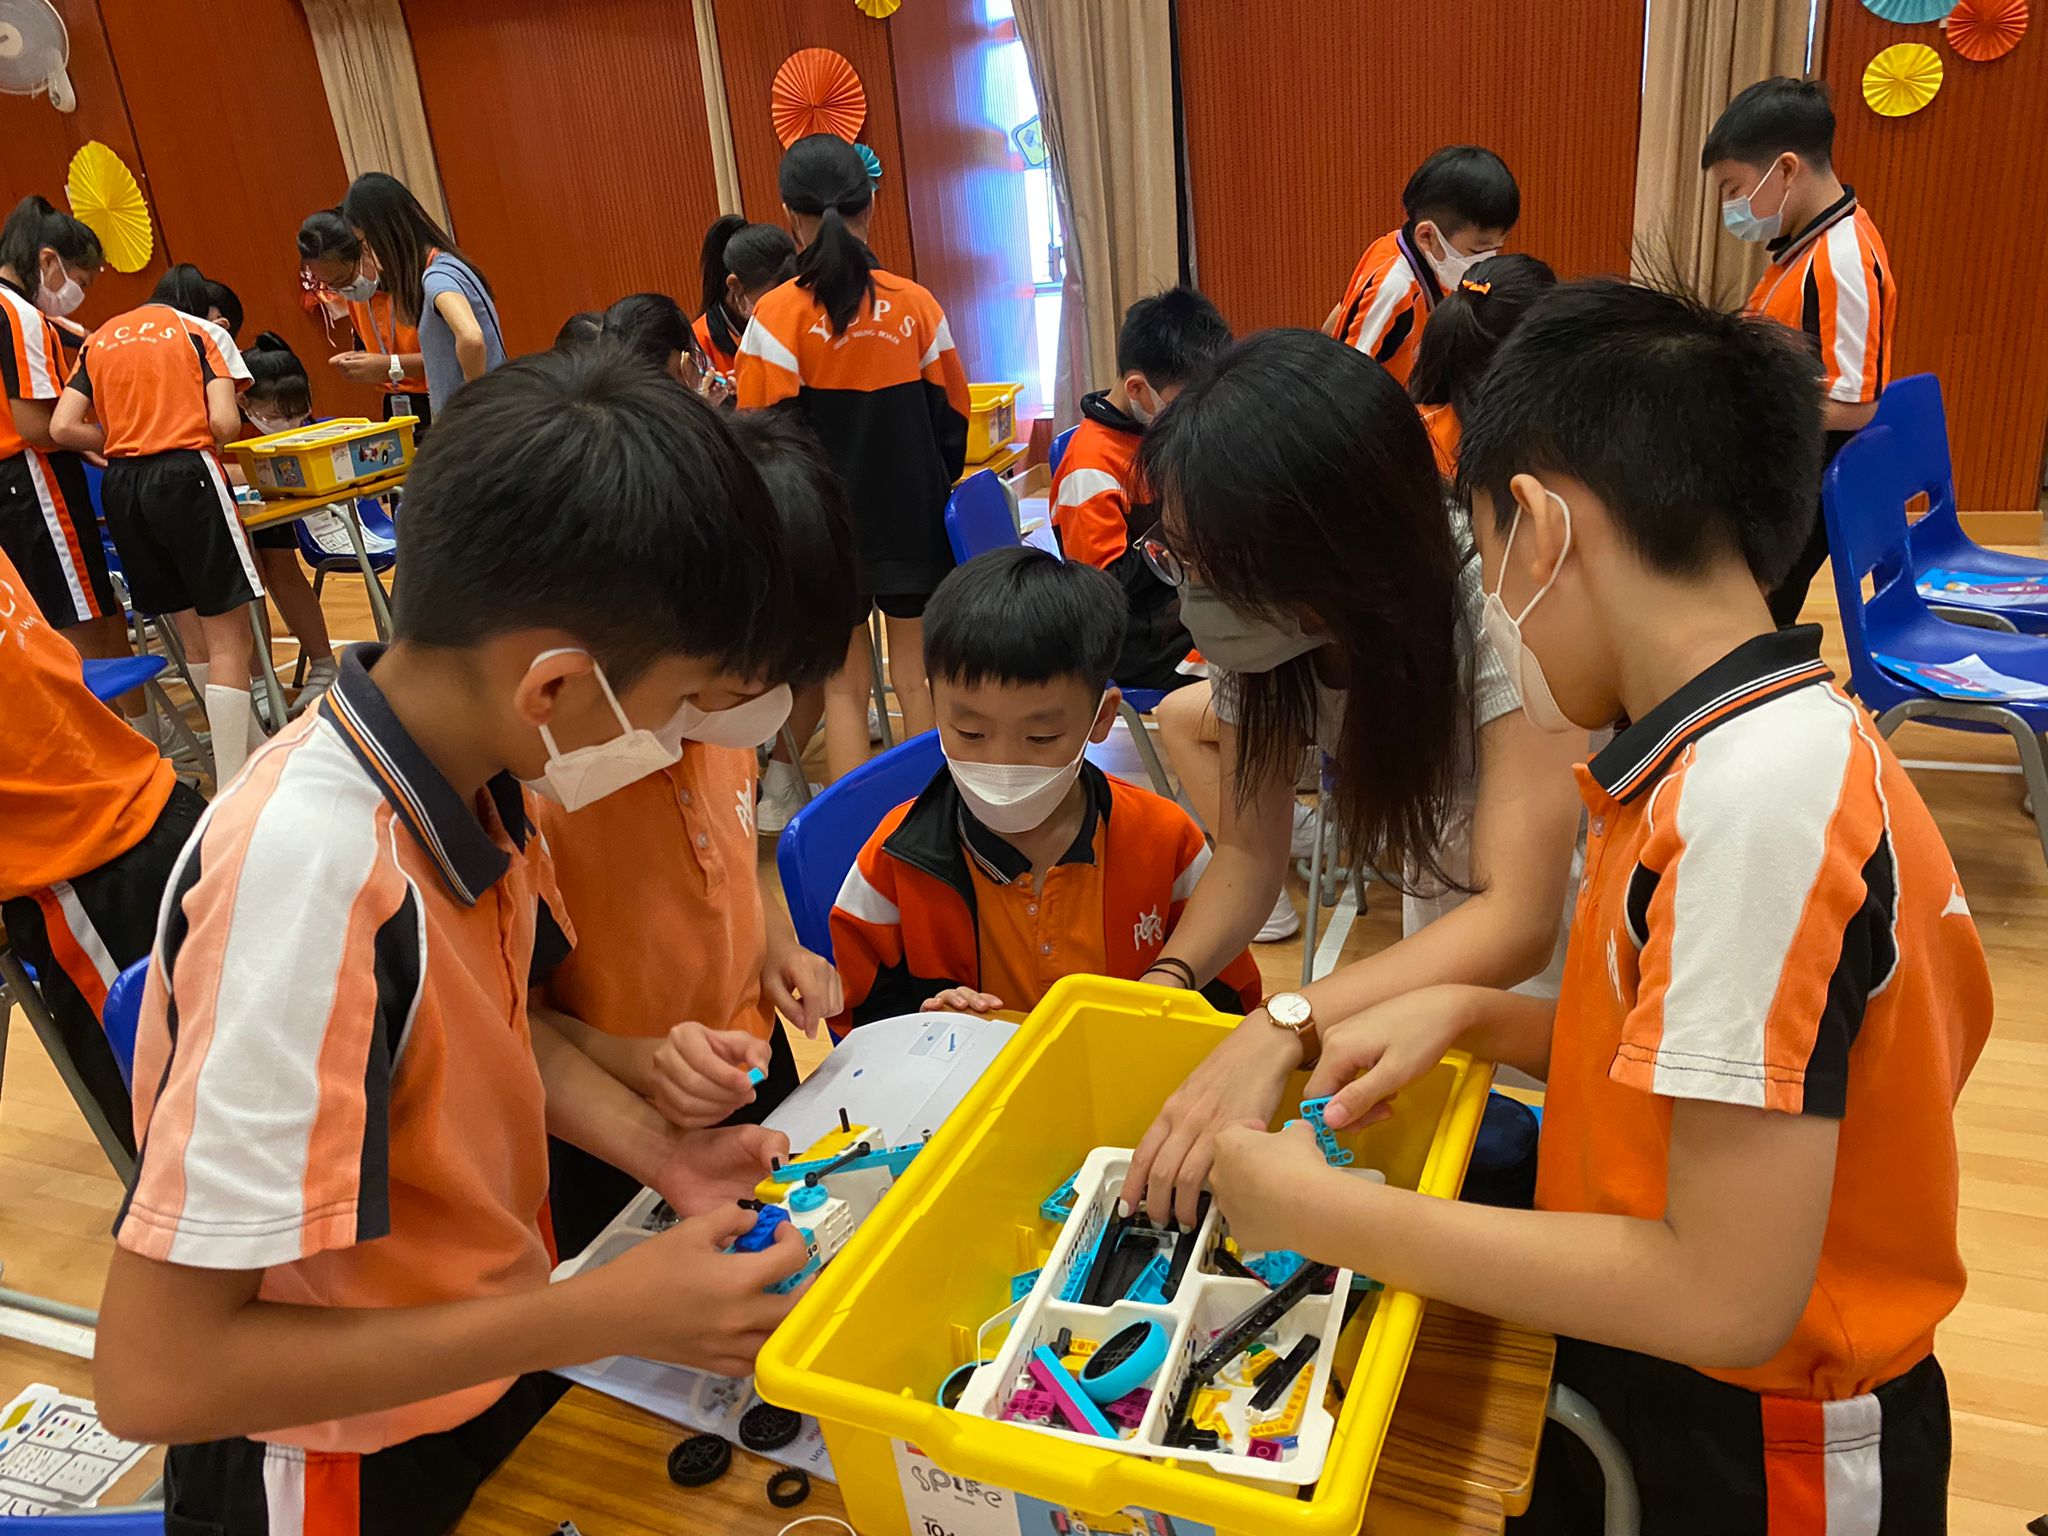 SPIKE Prime Fun Day - Yaumati Catholic Primary School (Hoi Wang Road)